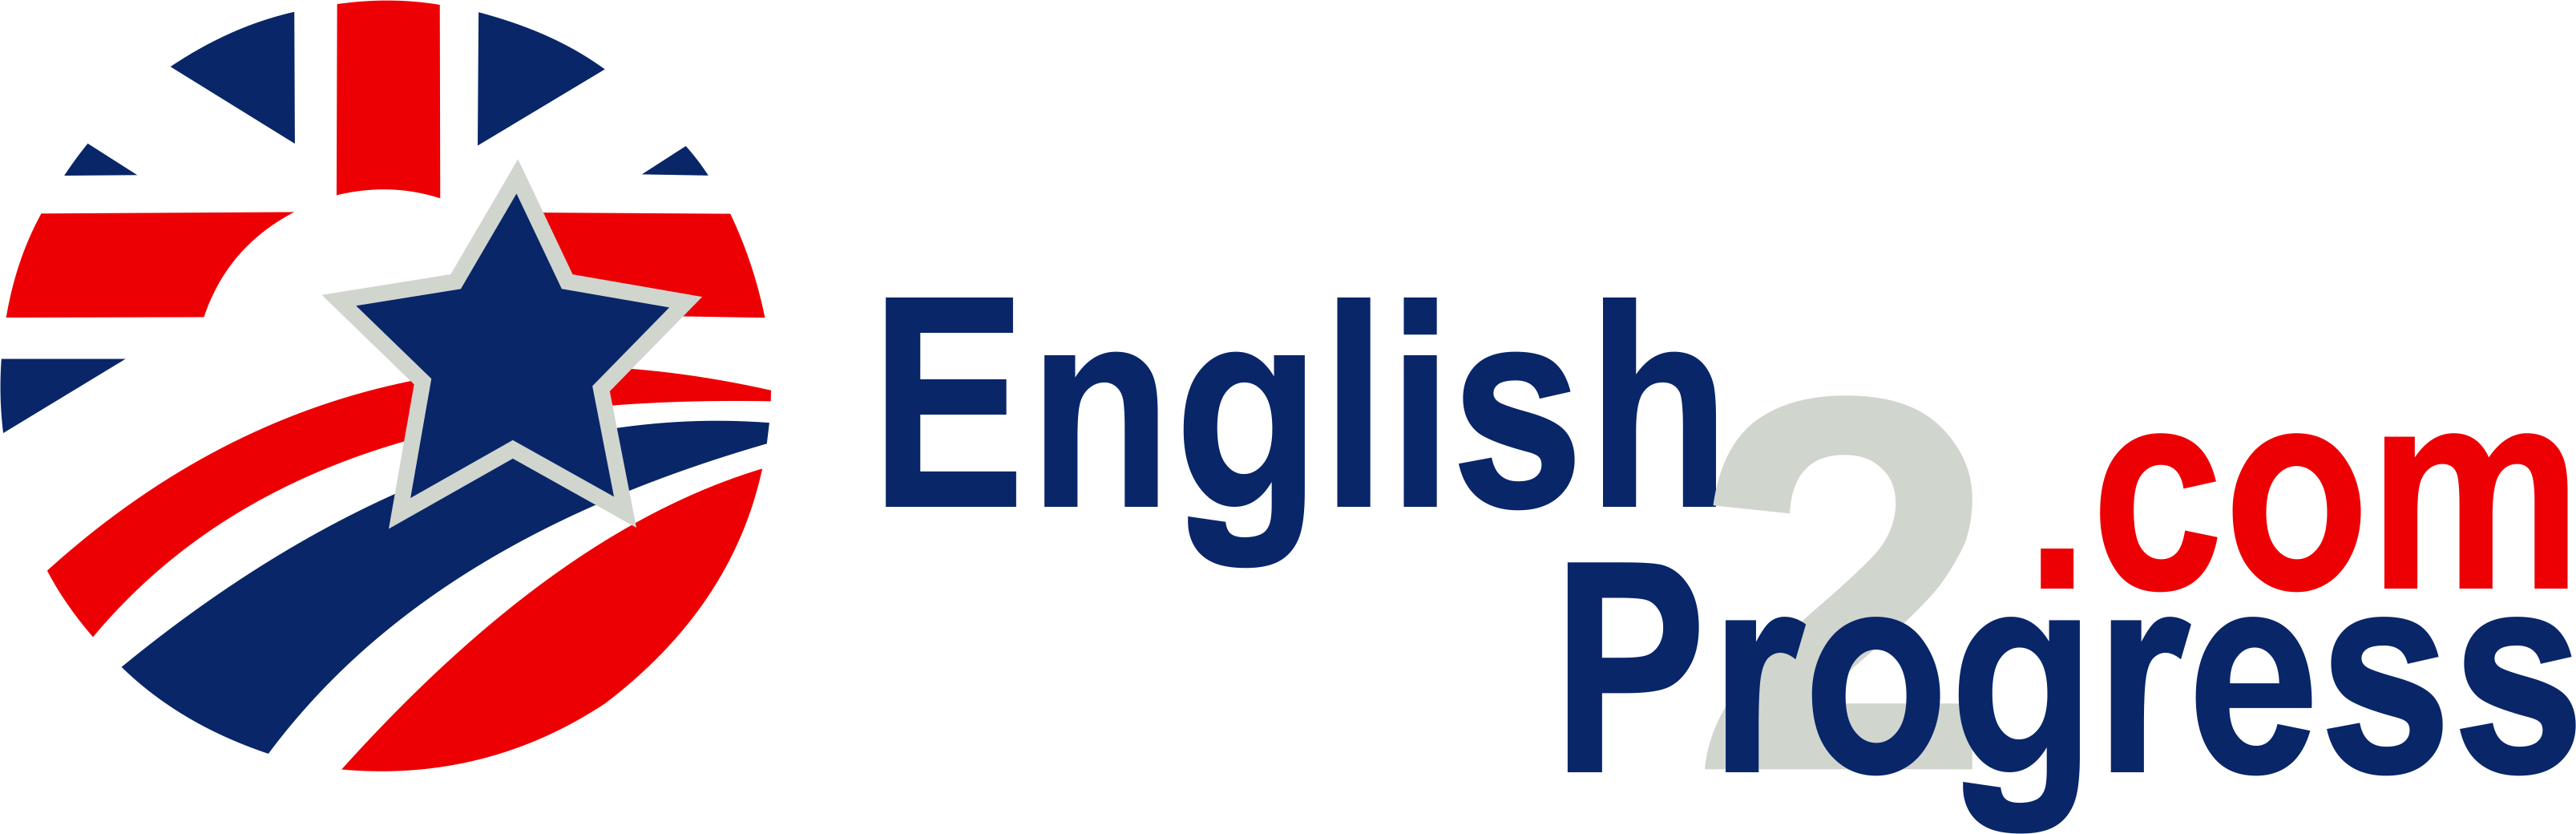 Ingles Logo - Logo En Ingles Vector And Clip Art Inspiration Logo Image - Free ...